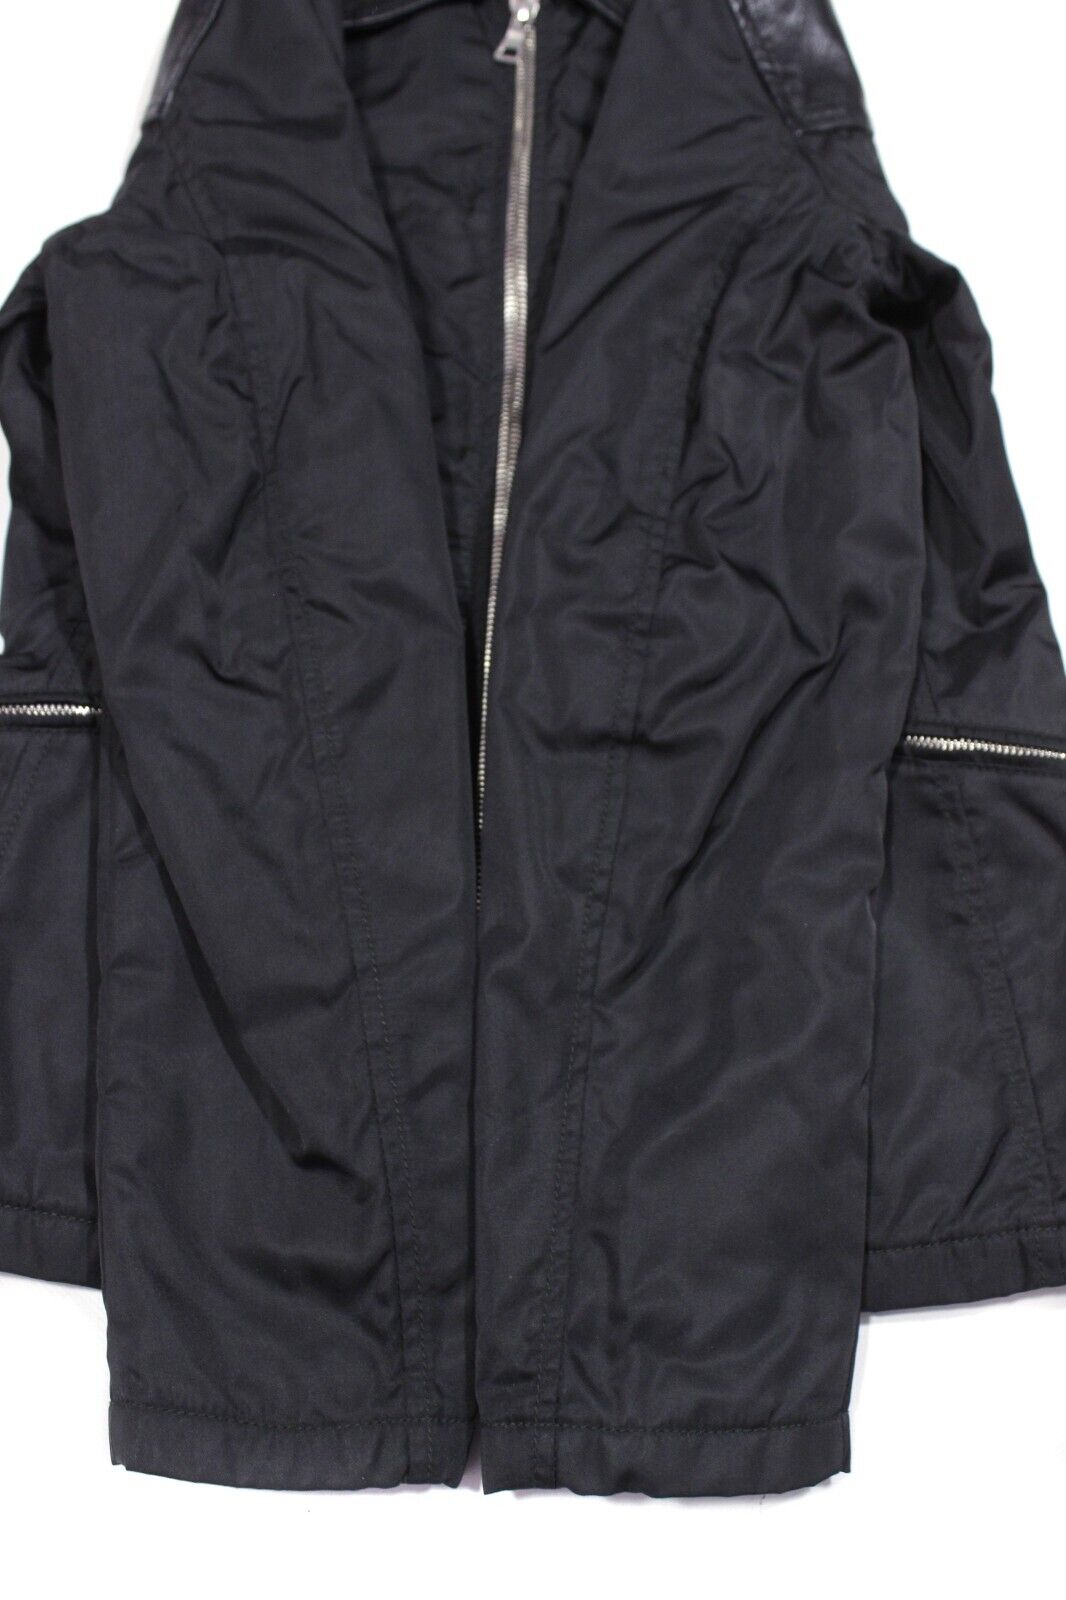 Prada 90S Mainline Nylon Leather Jacket Vintage | eBay